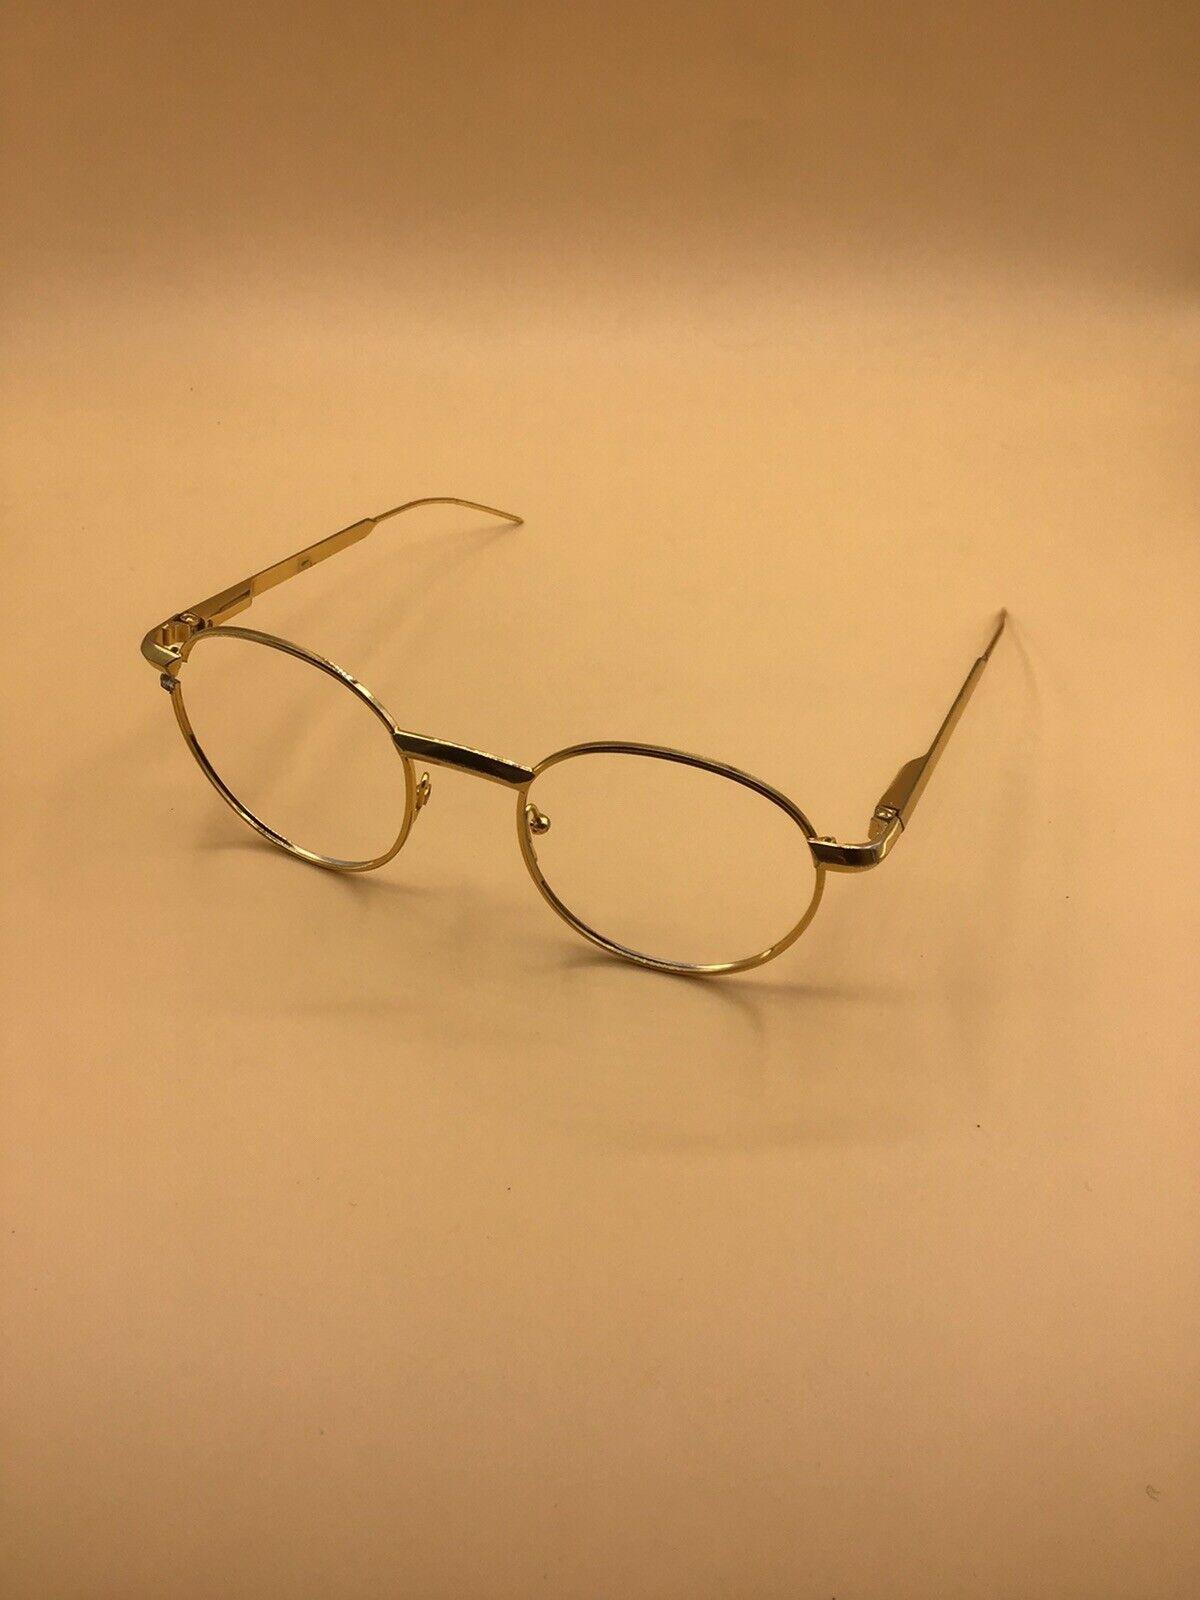 Gianfranco Ferre occhiale vintage eyewear frame brillen lunettes